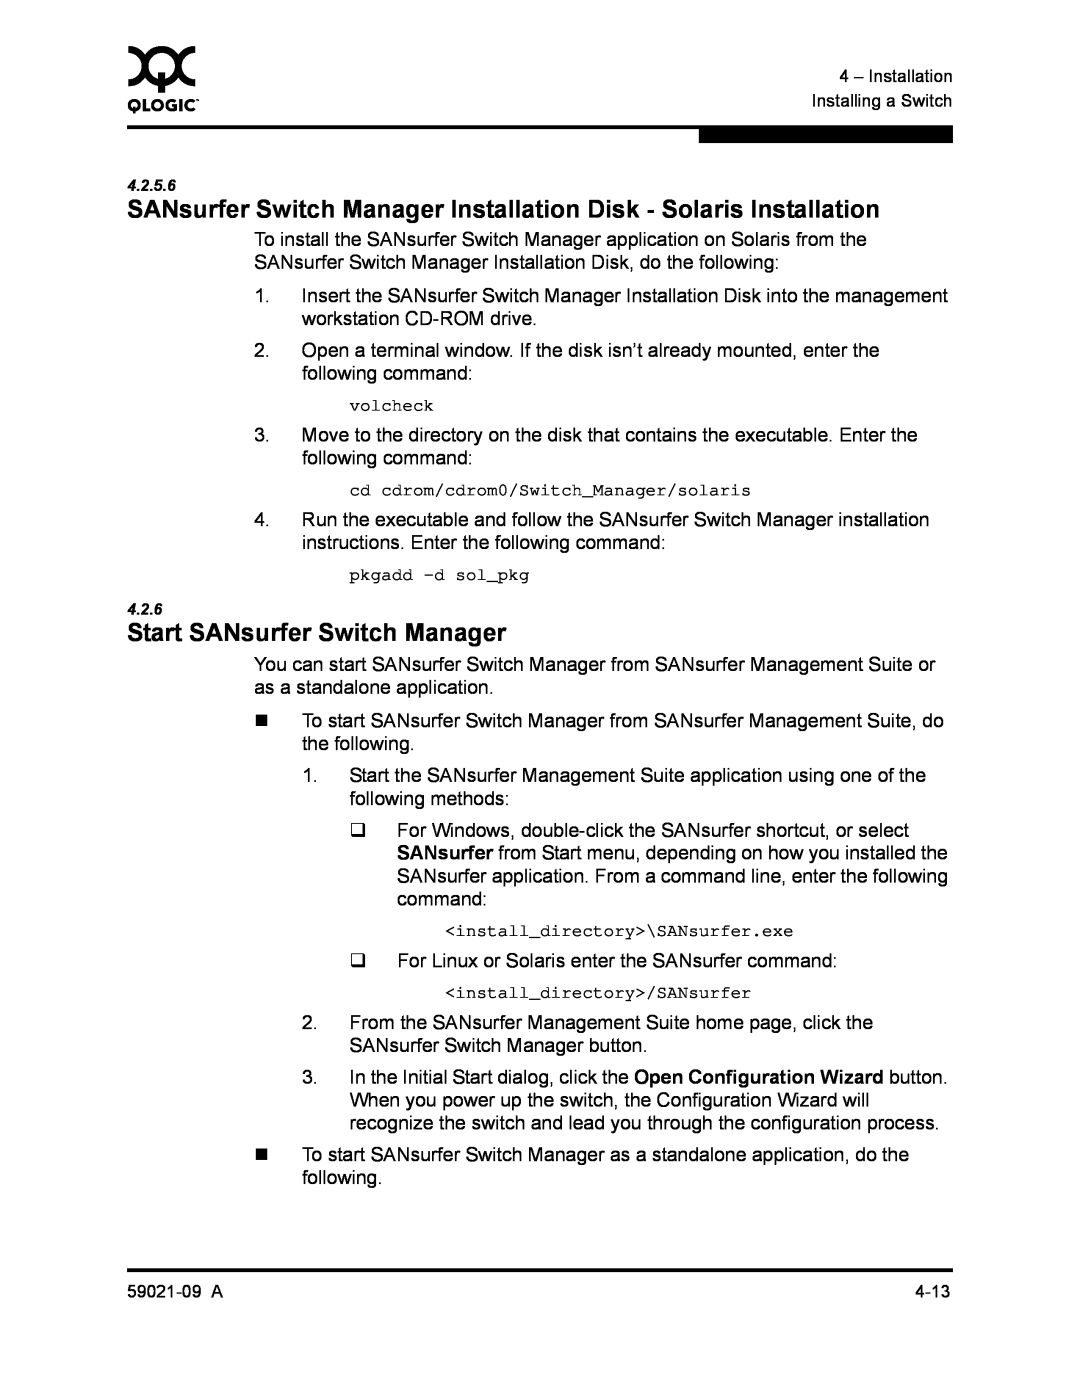 Q-Logic SB2A-16B manual SANsurfer Switch Manager Installation Disk - Solaris Installation, Start SANsurfer Switch Manager 